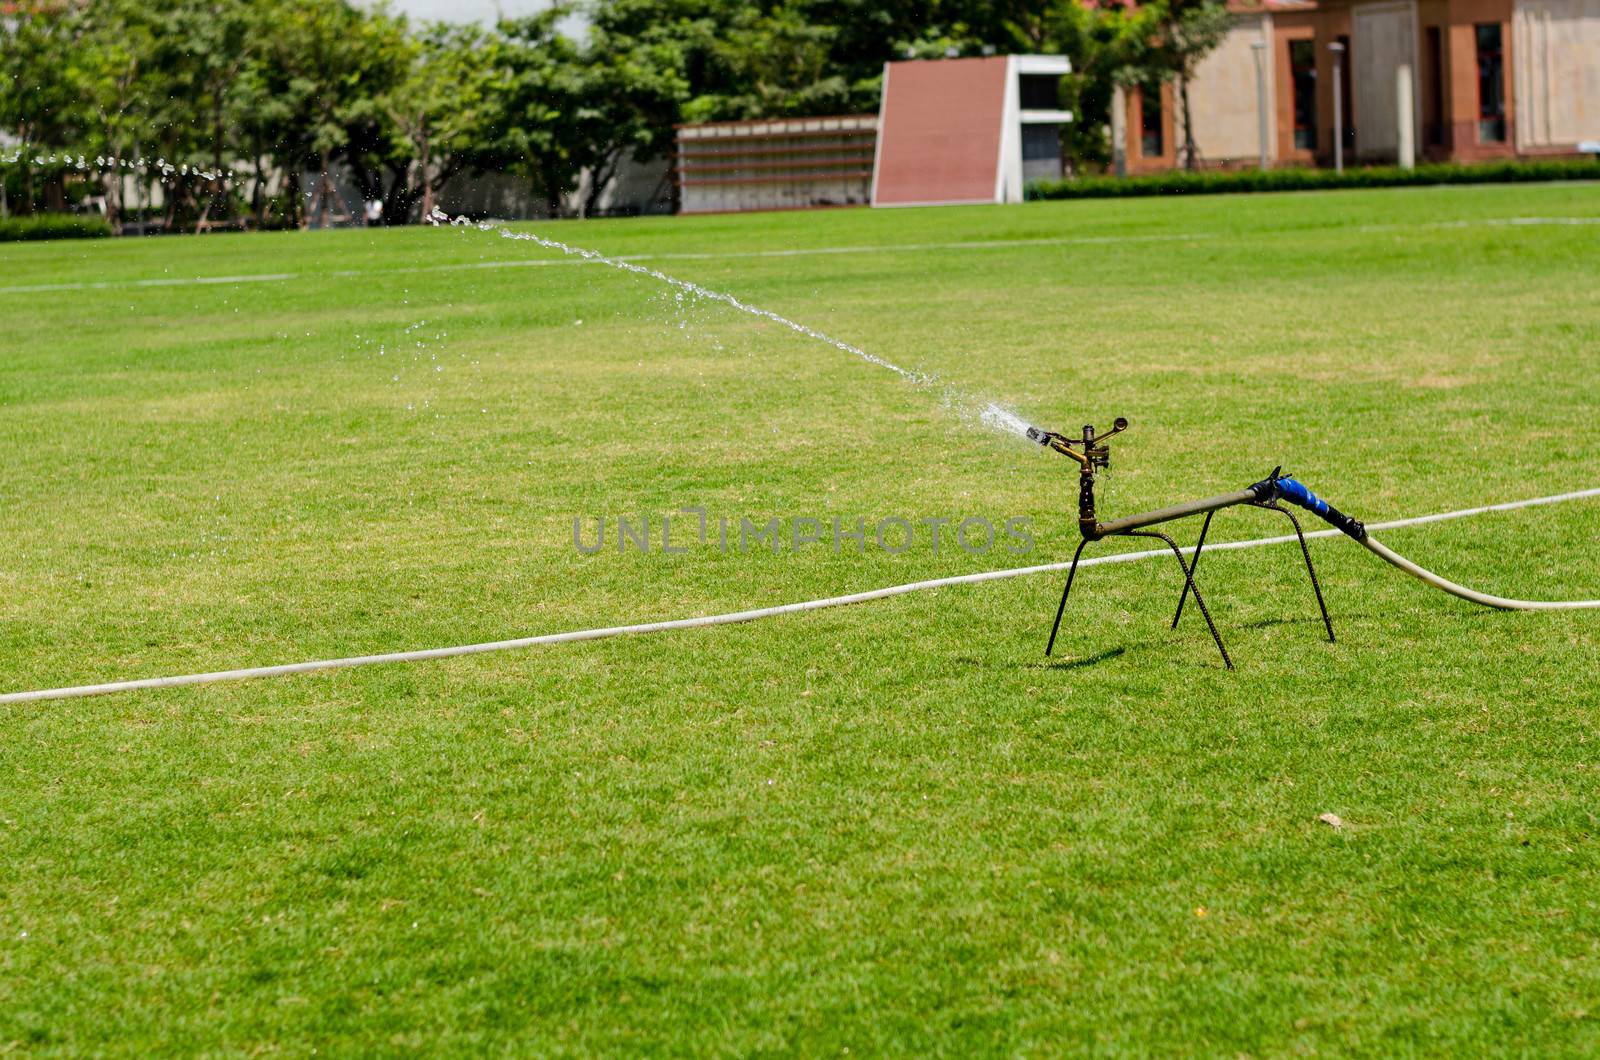 watering in football field on day